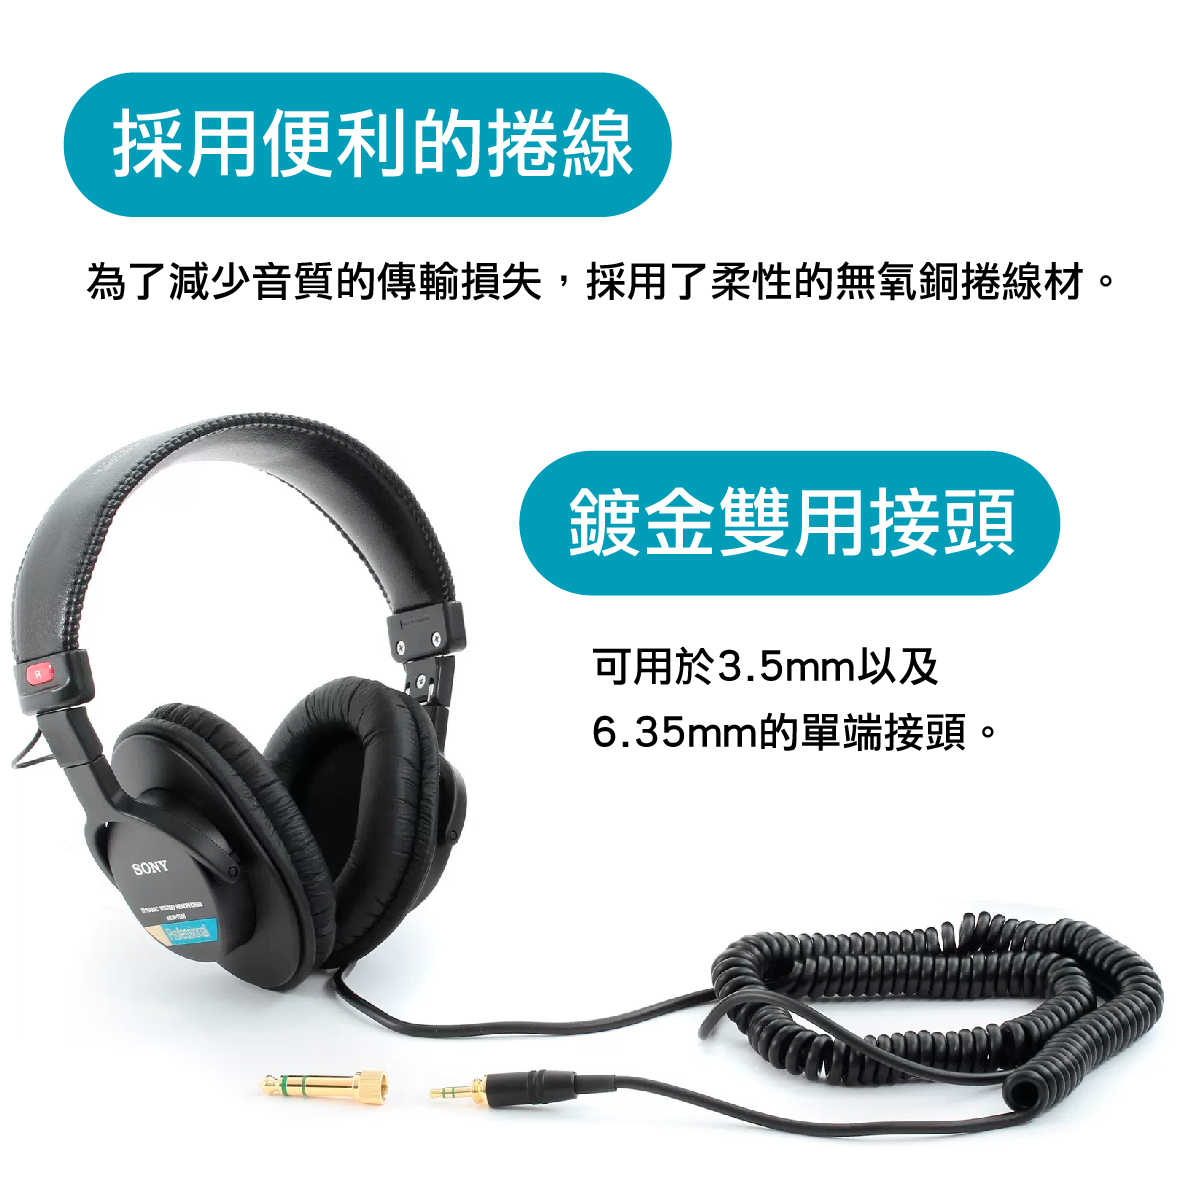 SONY 索尼 MDR-7506 專業 監聽 耳罩式耳機 | 金曲音響